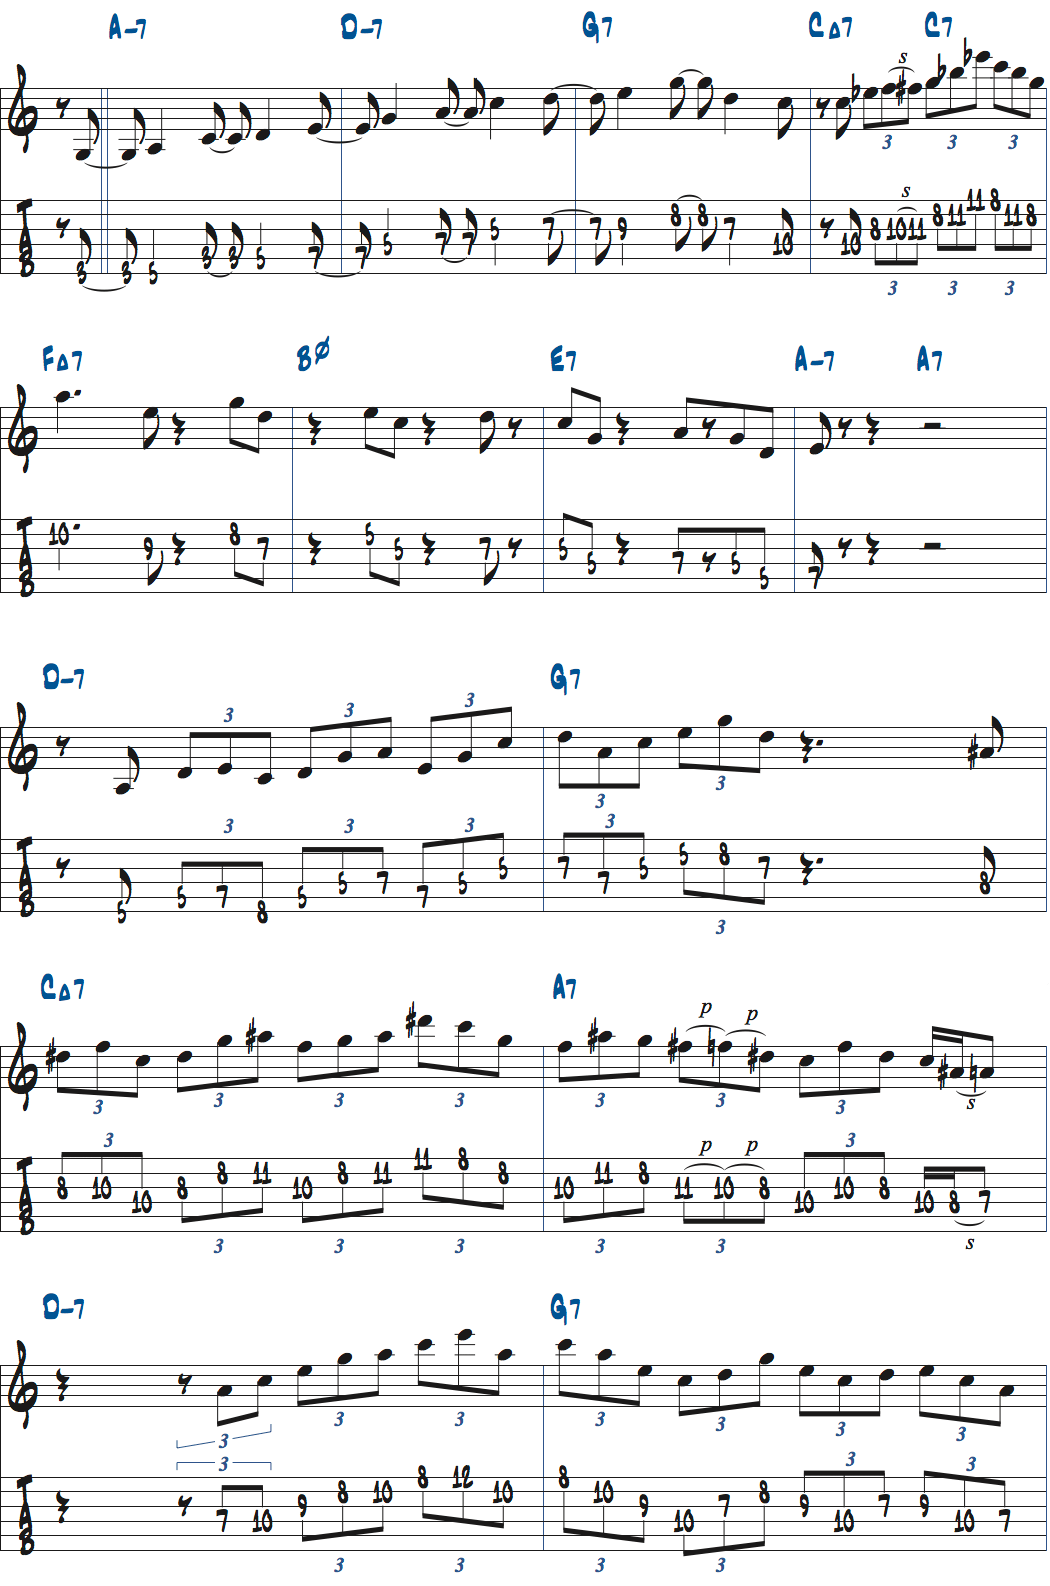 Cブルーススケールを使ったアドリブ例2ページ1楽譜